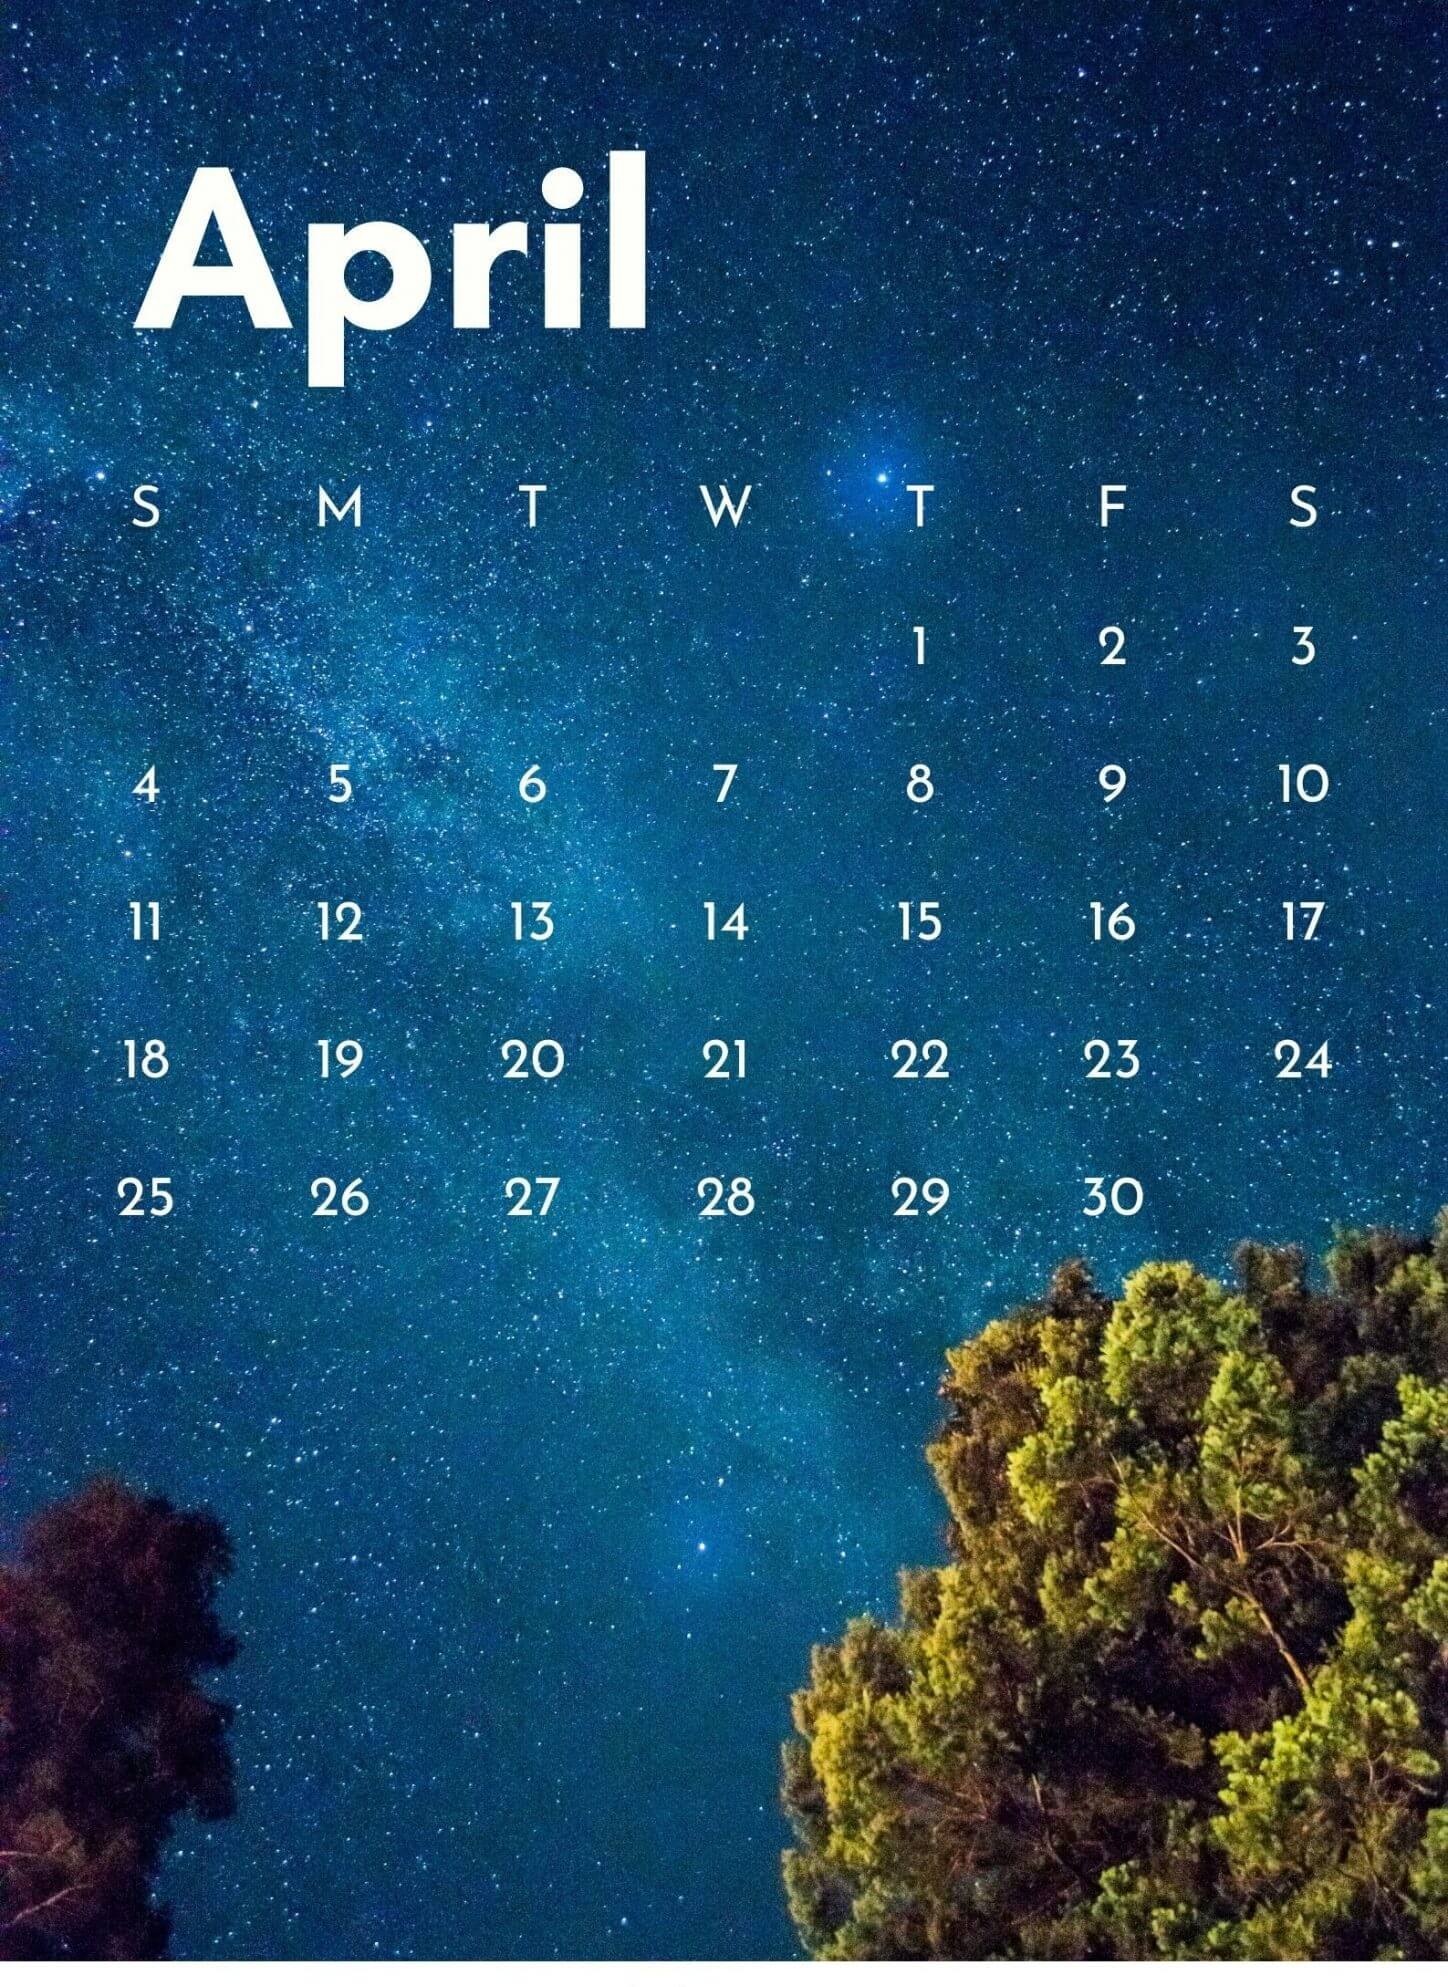 April 2021 Calendar Wallpaper for Mobile Phone